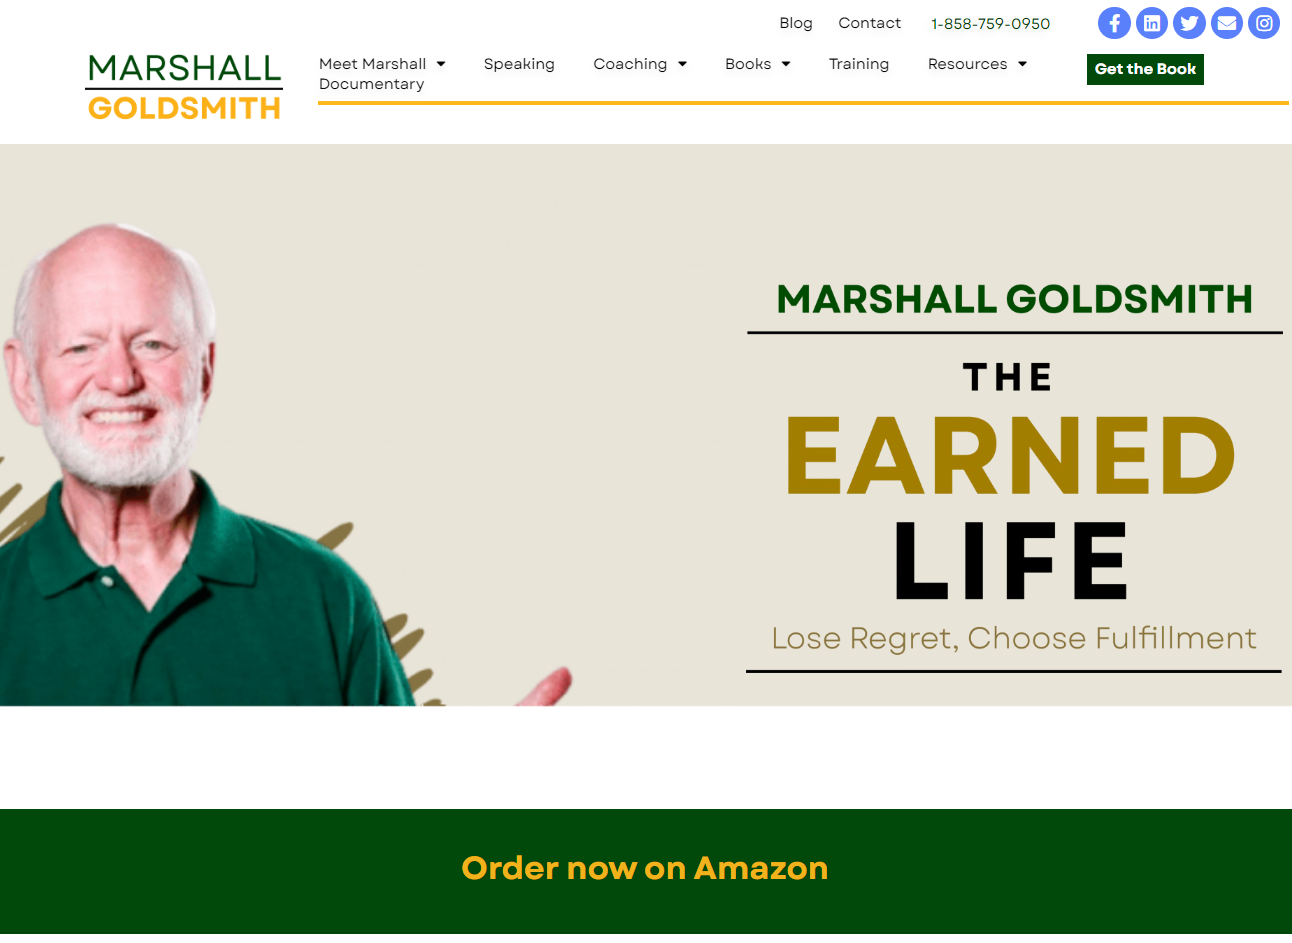 website design for coaches, example from Marshall GoldsmithIMG Name: goldsmith